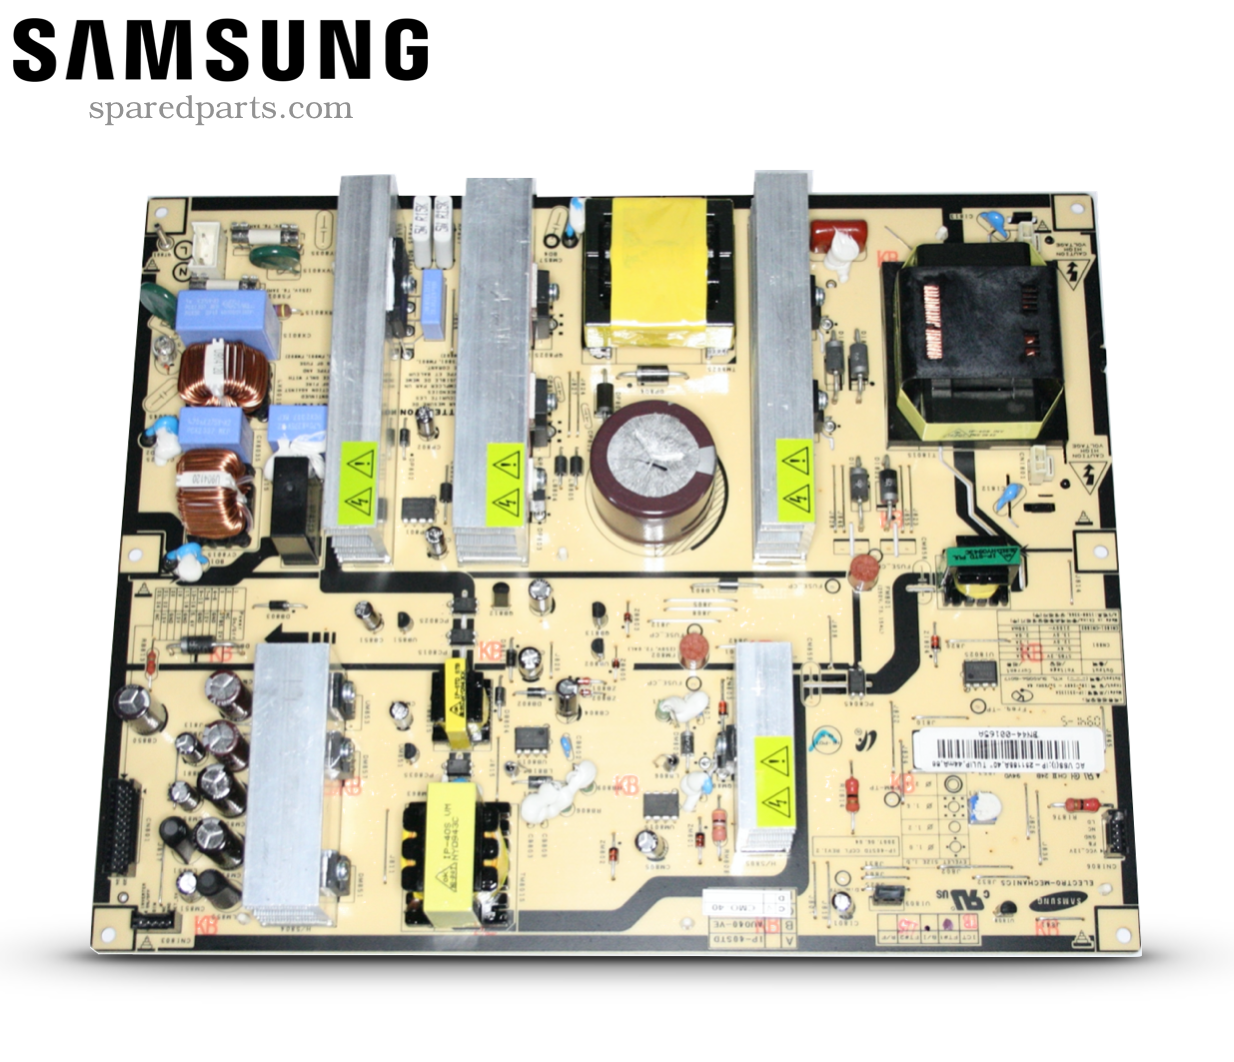 Samsung IP-23135A BN44-00165A